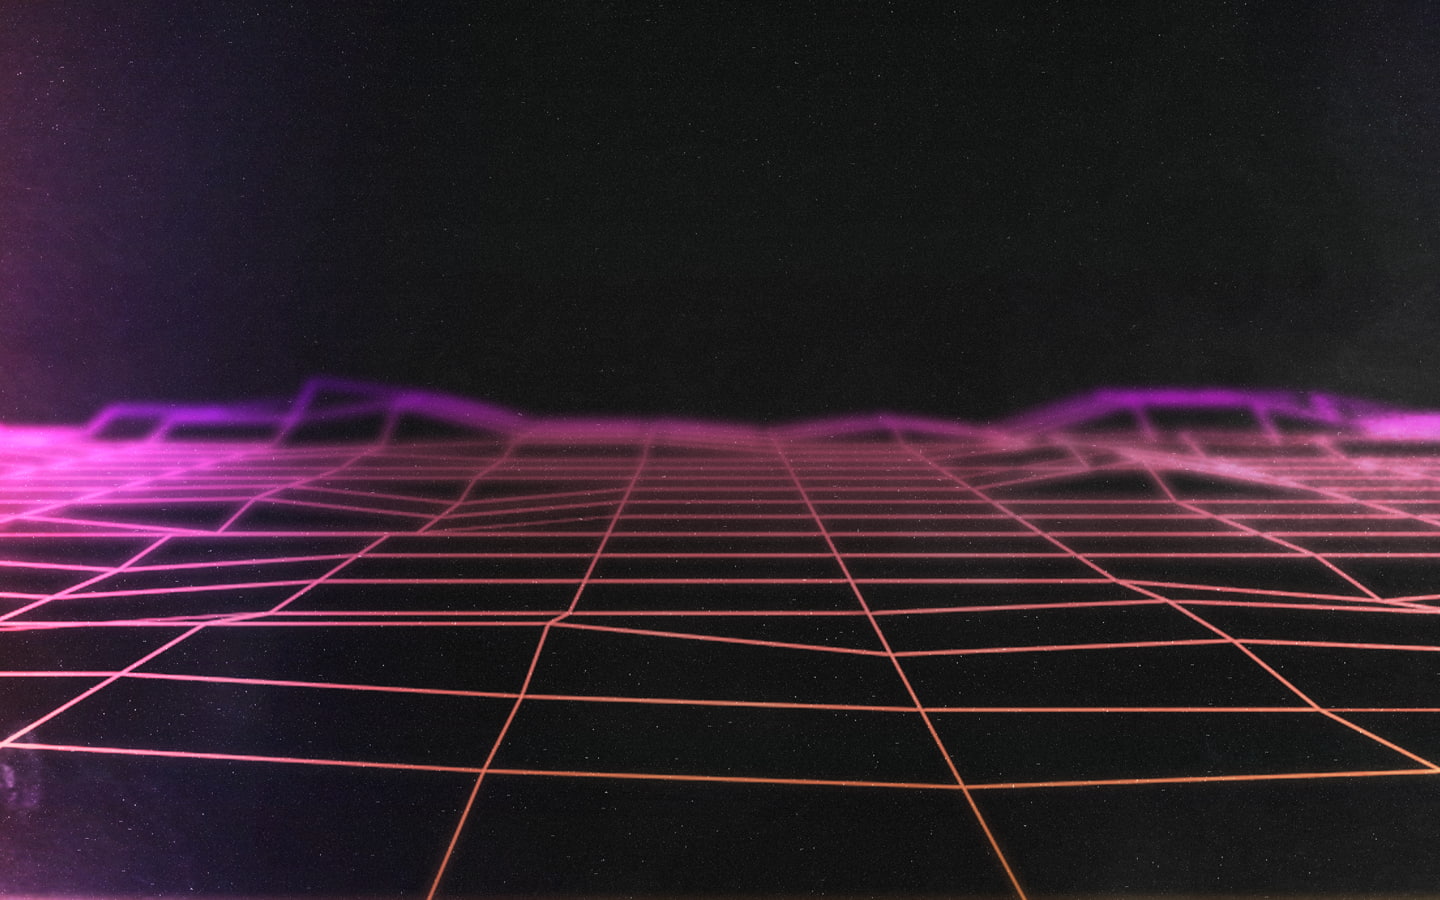 vaporwave, Retro style, 1980s, night, no people, pattern, illuminated